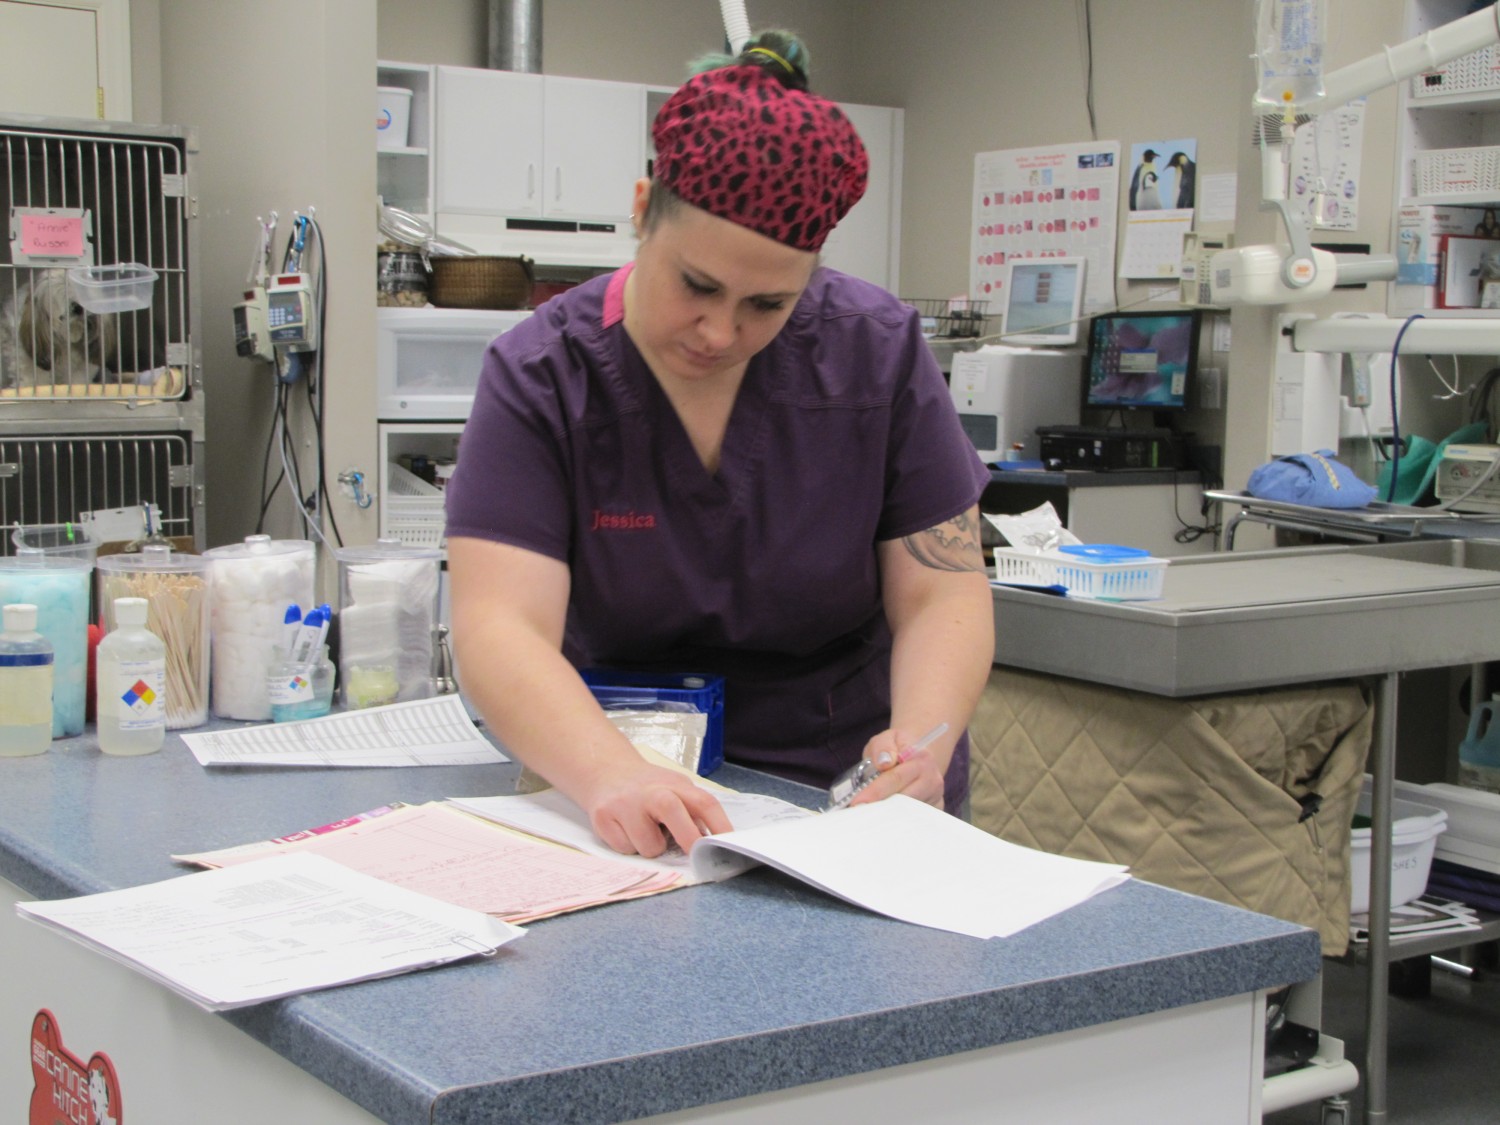 Tech Jessica updates a patient's records after a procedure